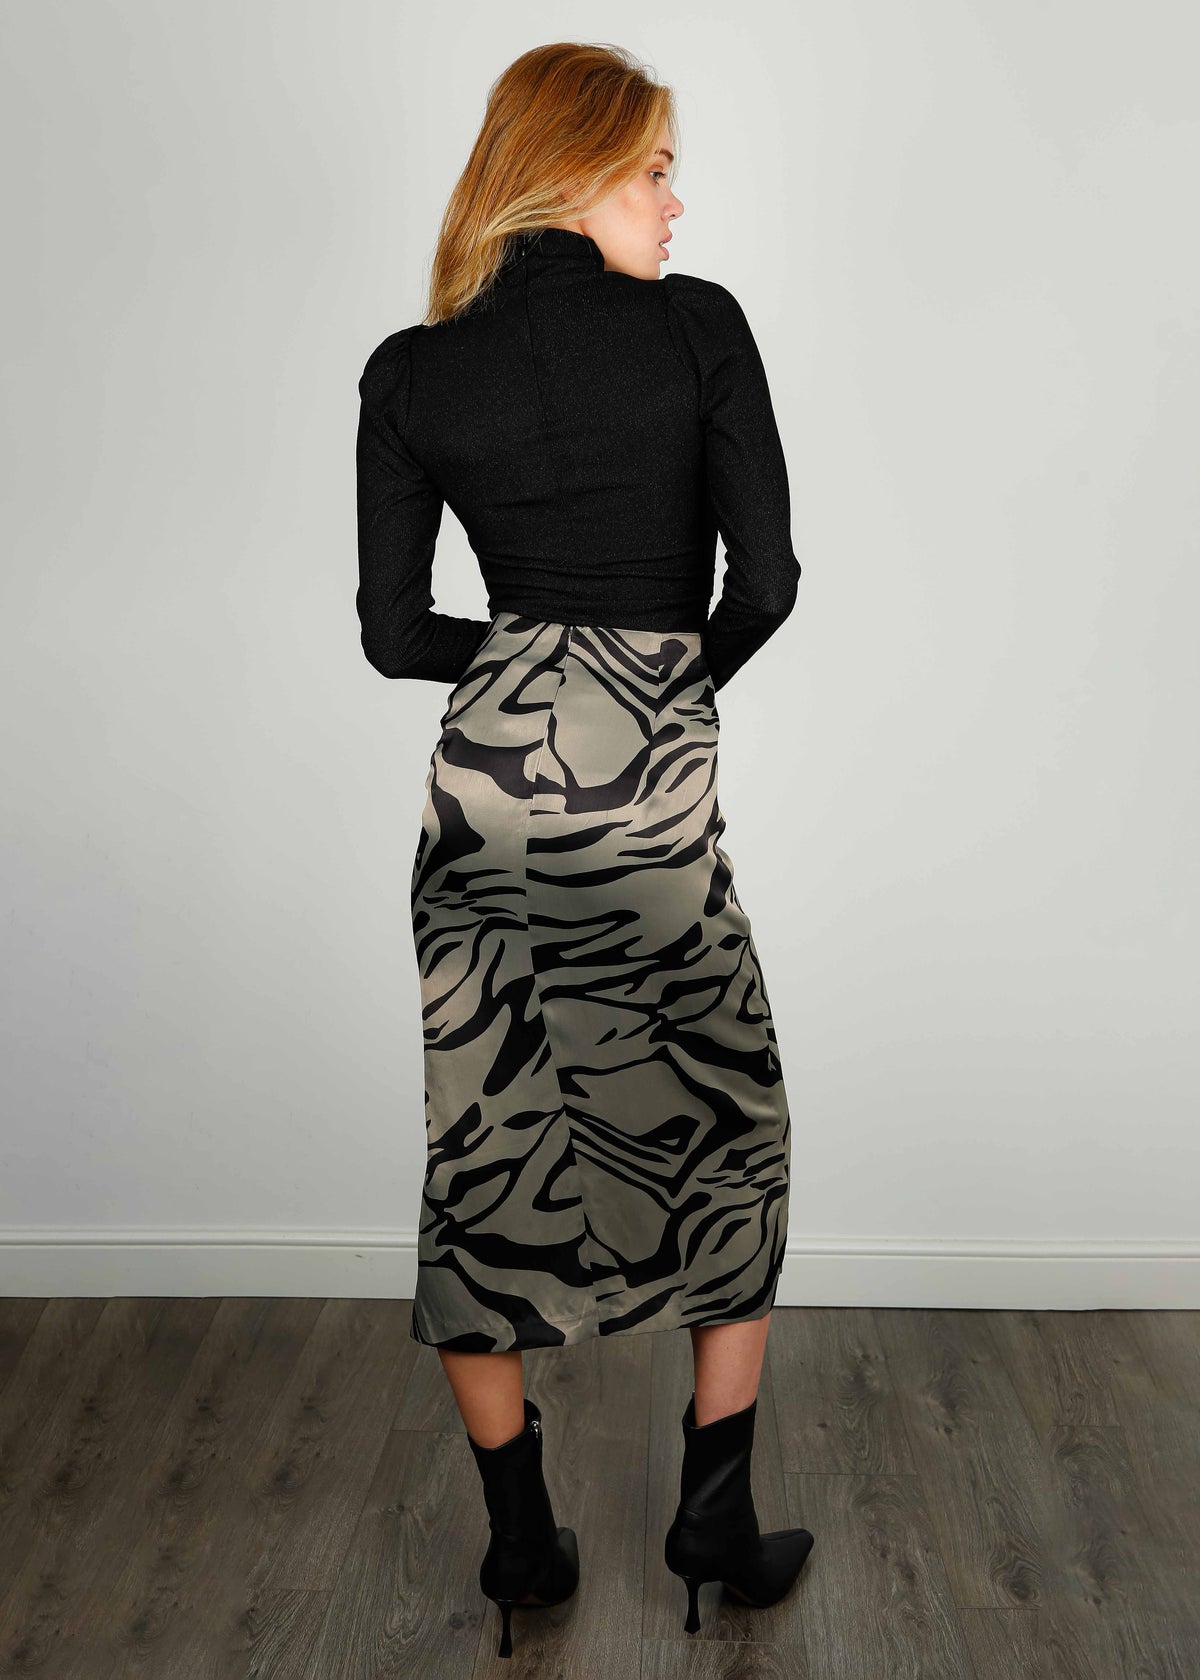 SEC.F Zebra Skirt in Bungee Cord